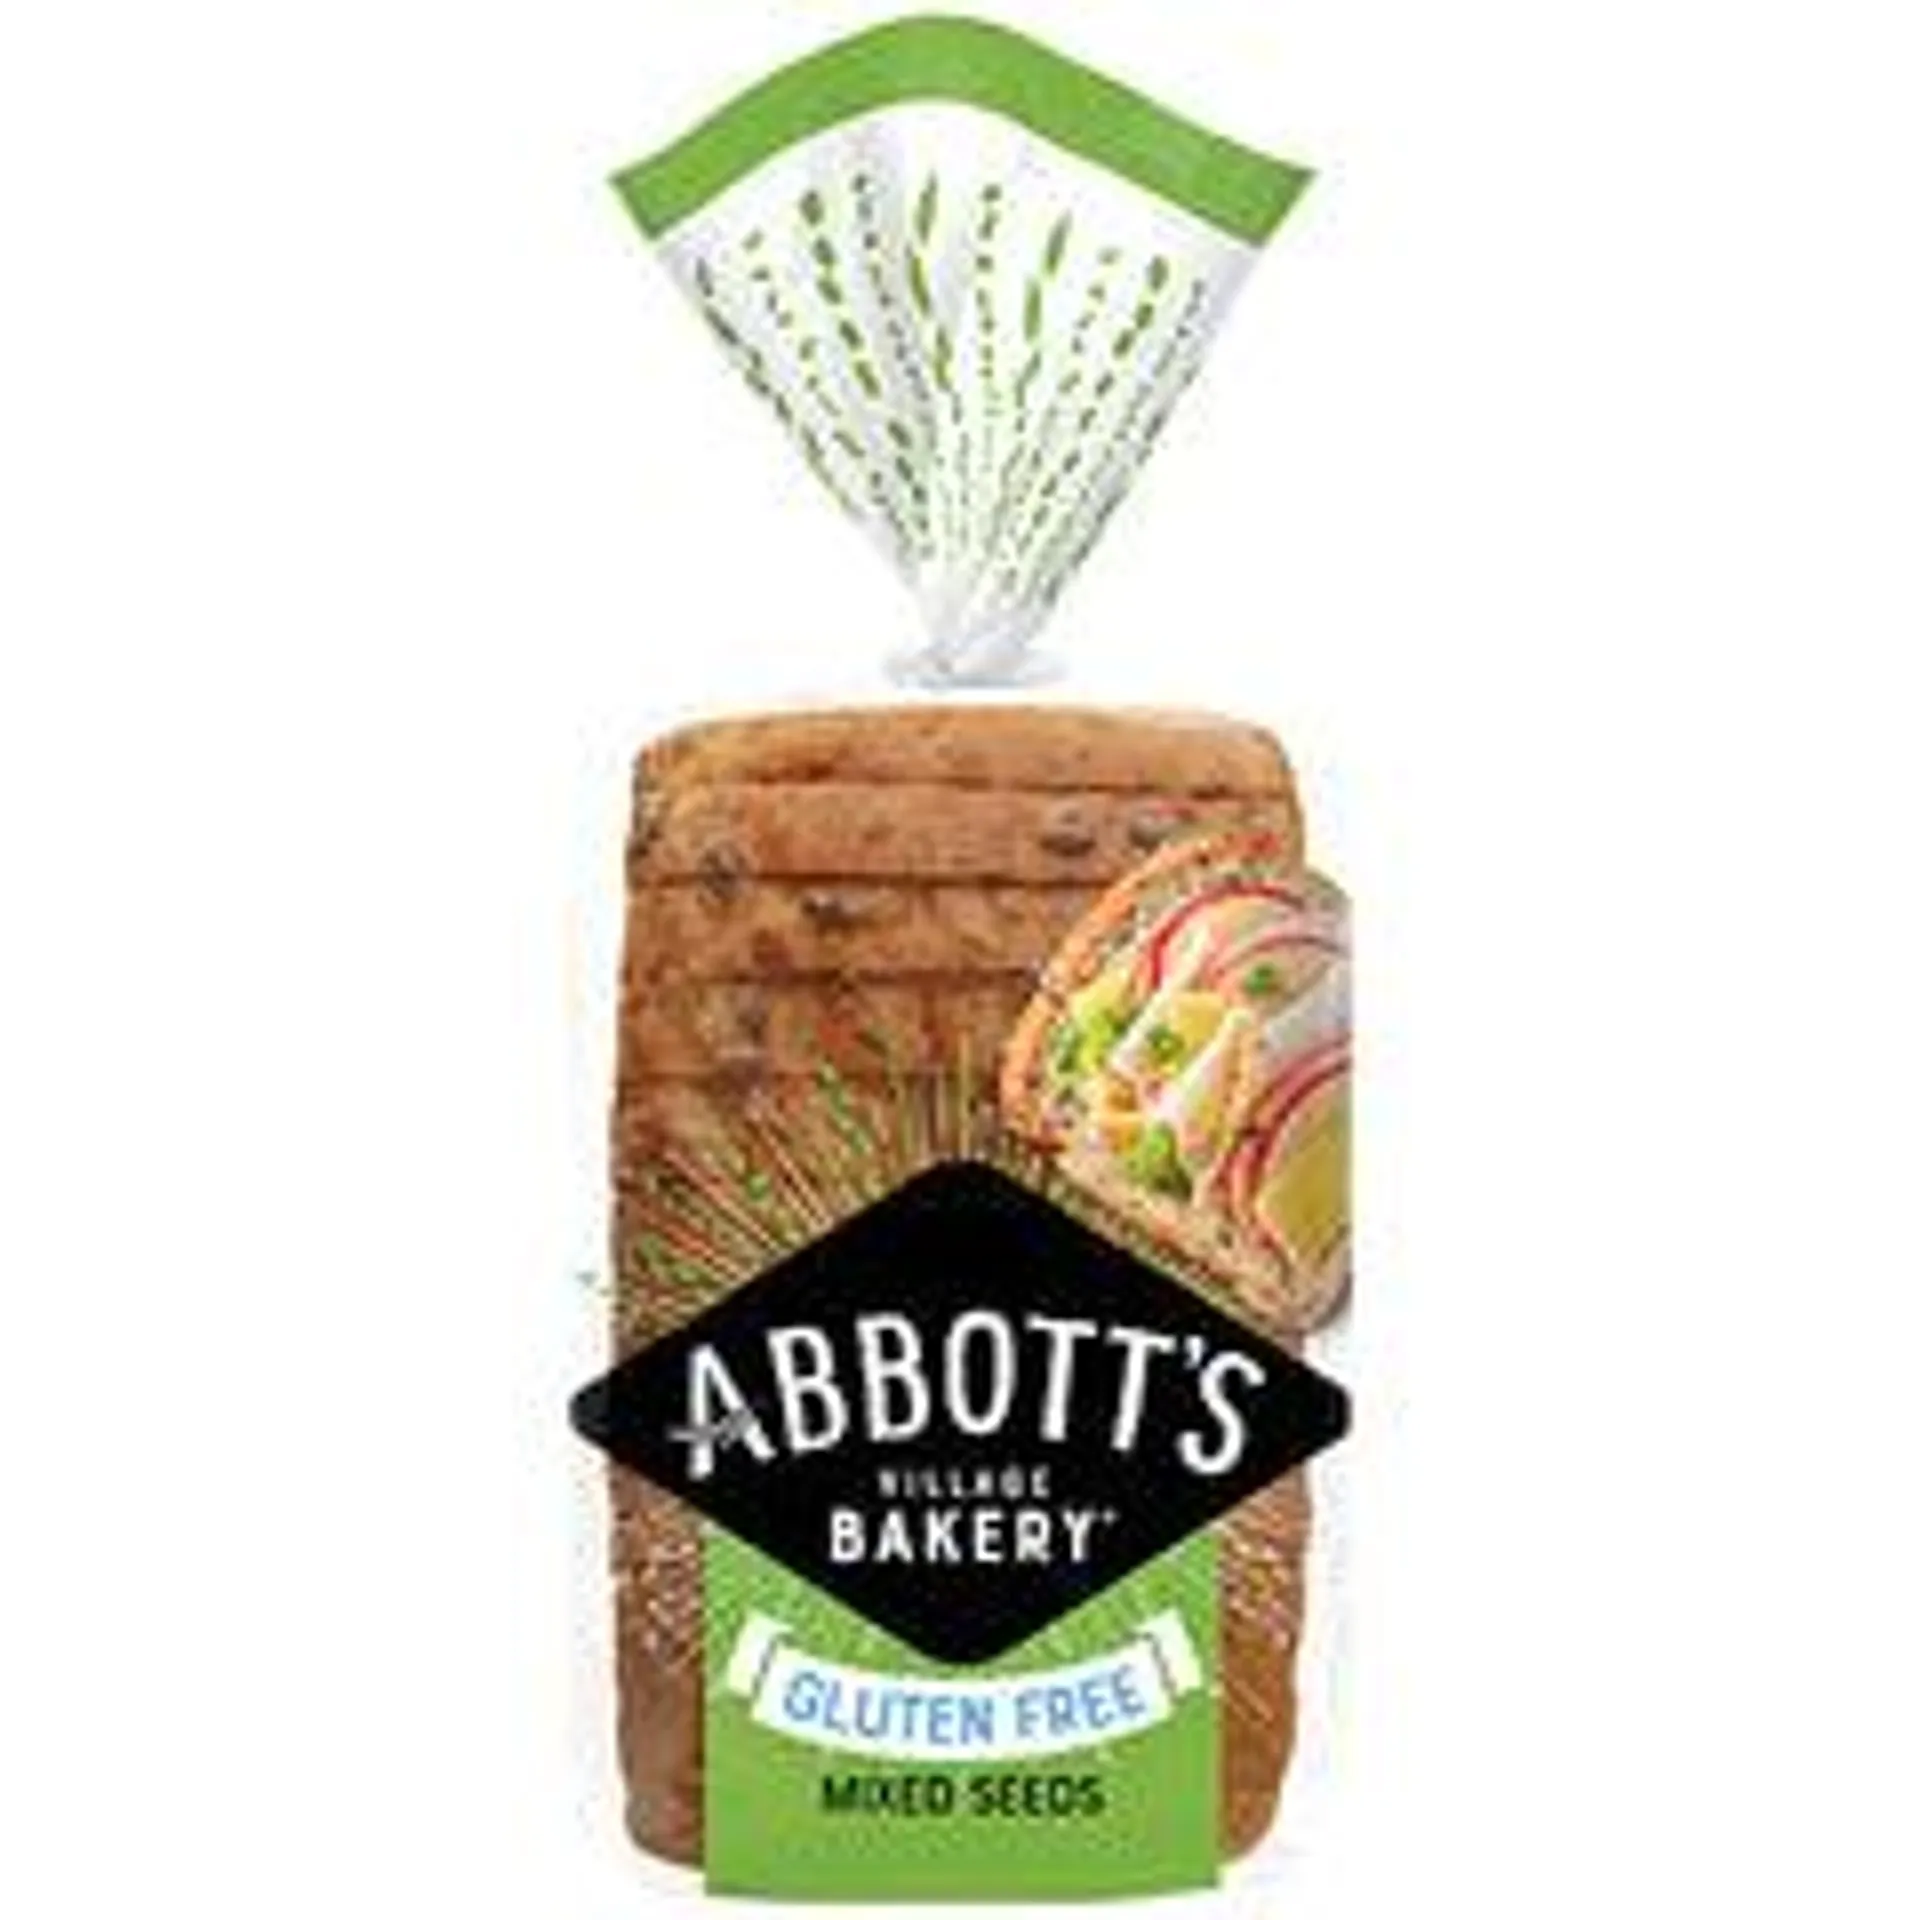 Abbotts Bakery Gluten Free Mixed Seeds 500g